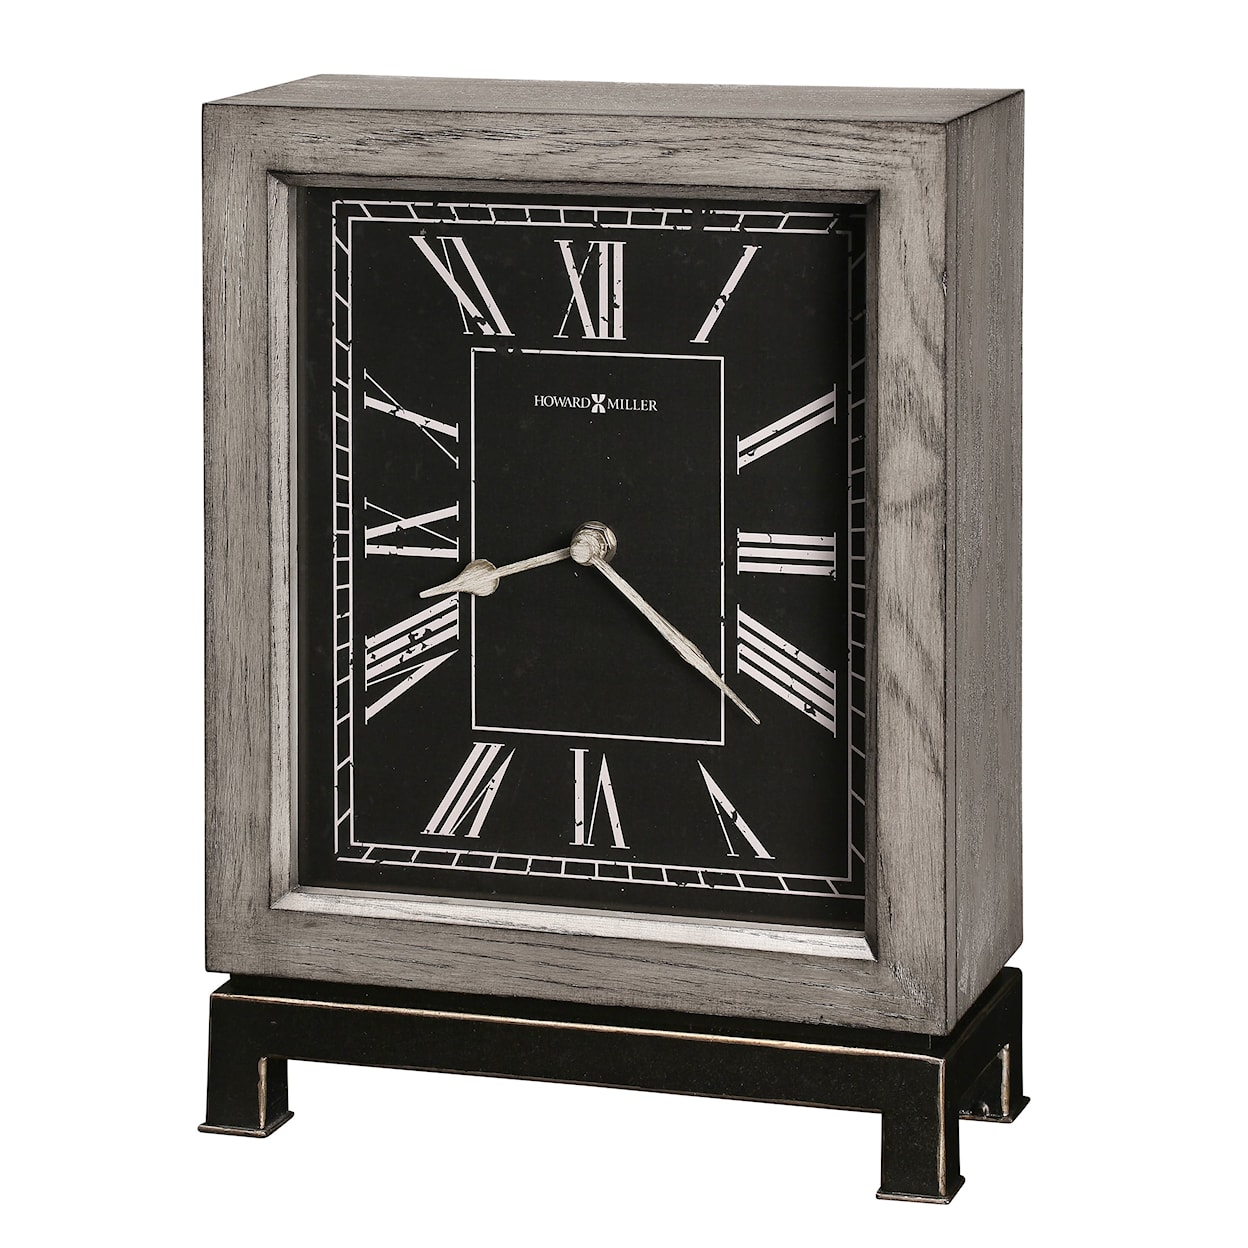 Howard Miller Howard Miller Merrick Mantel Clock